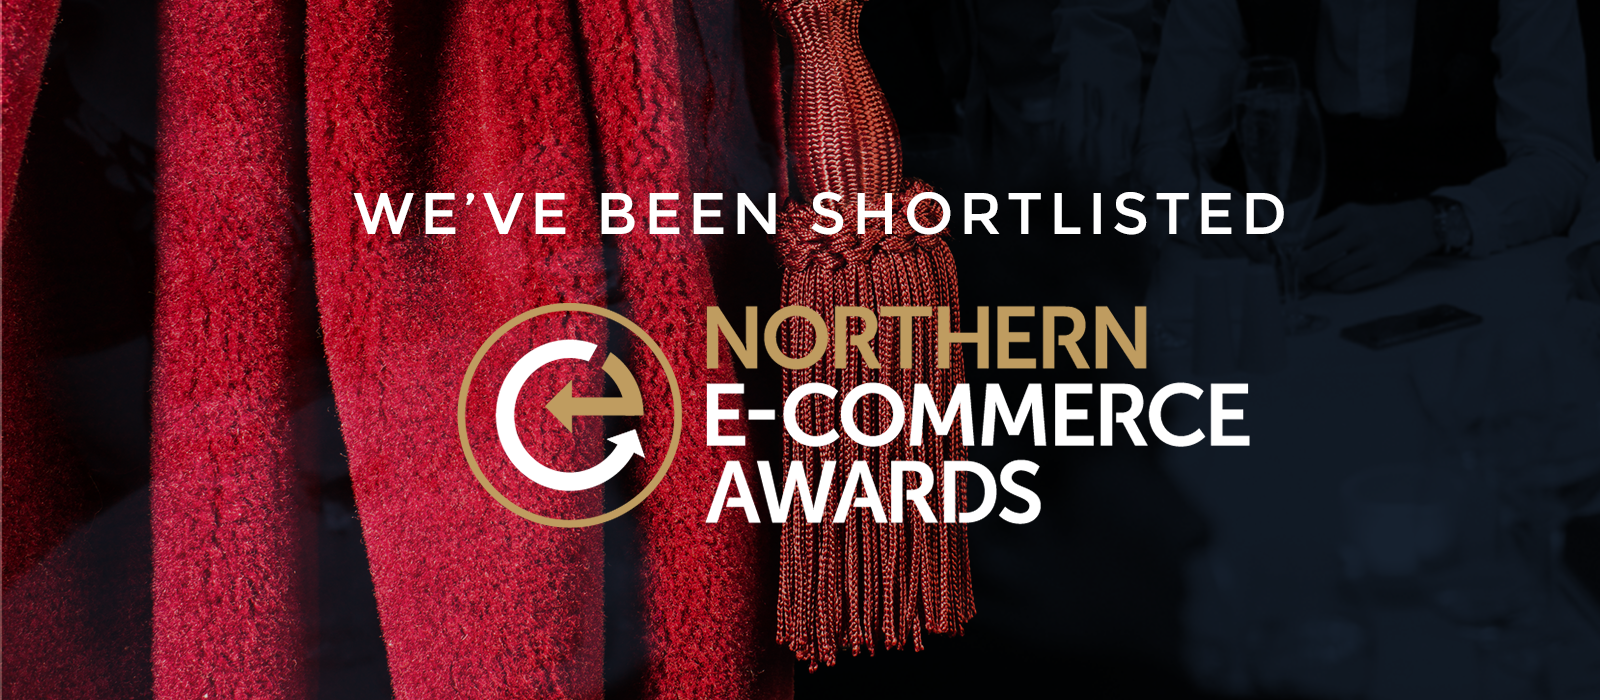 Northern eCommerce Awards Shortlist